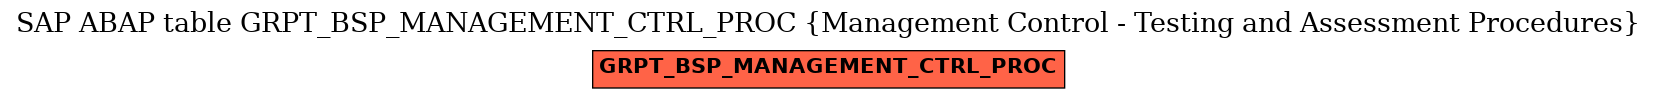 E-R Diagram for table GRPT_BSP_MANAGEMENT_CTRL_PROC (Management Control - Testing and Assessment Procedures)